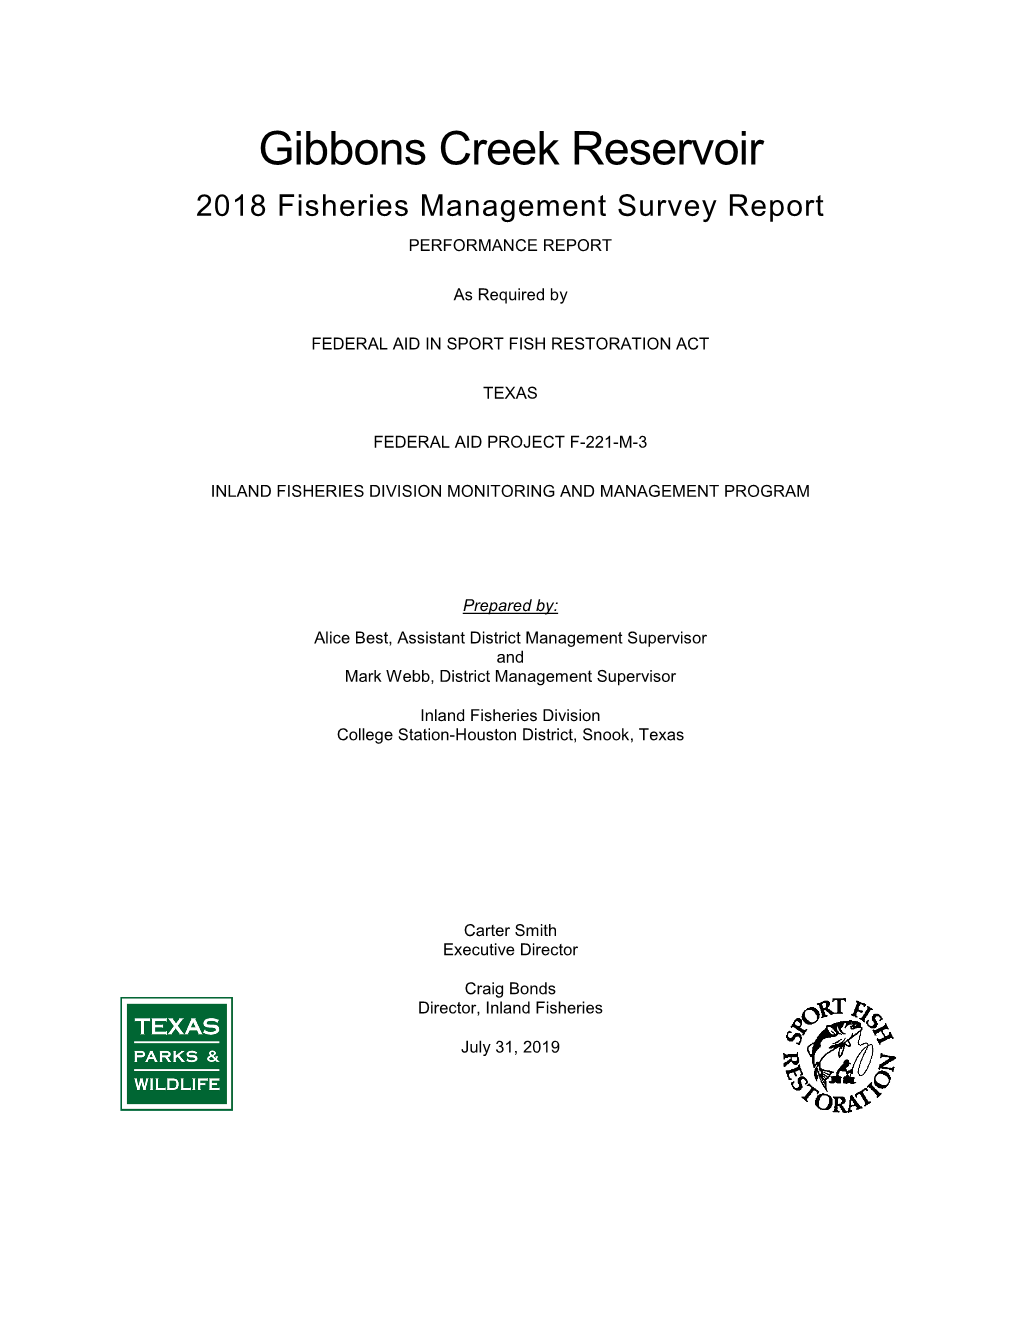 Gibbons Creek Reservoir 2018 Survey Report